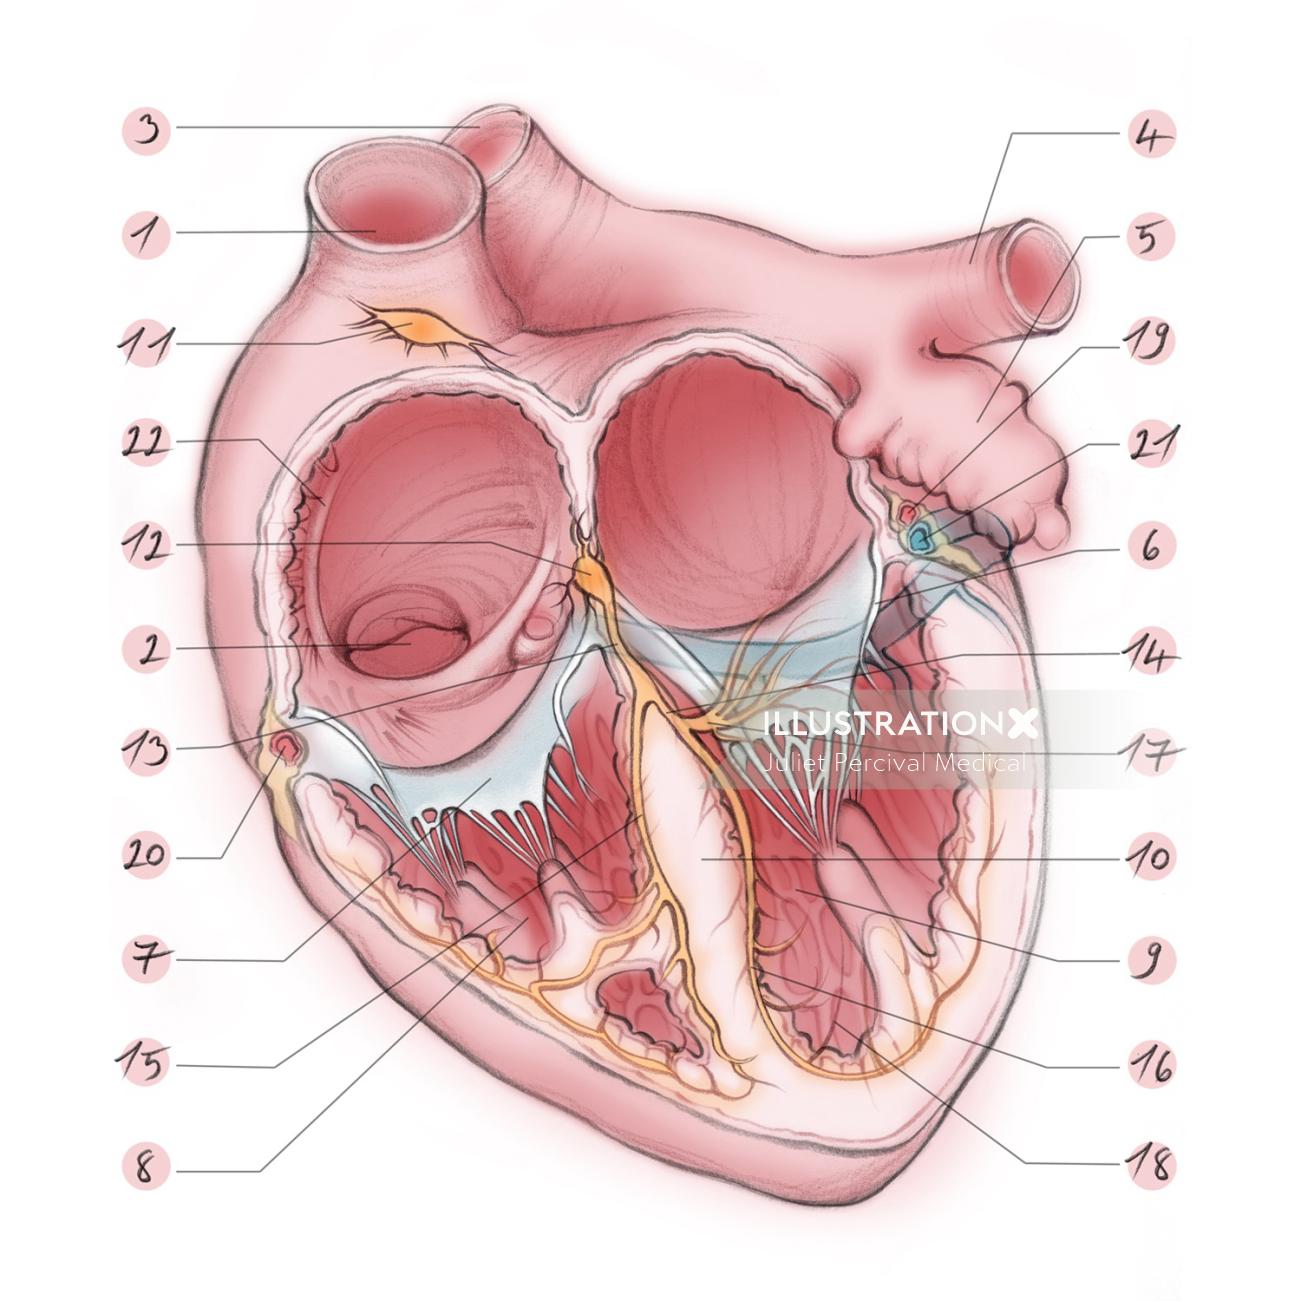 cœur, oreillettes, ventricule, aorte, appendice, valve mitrale, valve tricuspide, anatomie